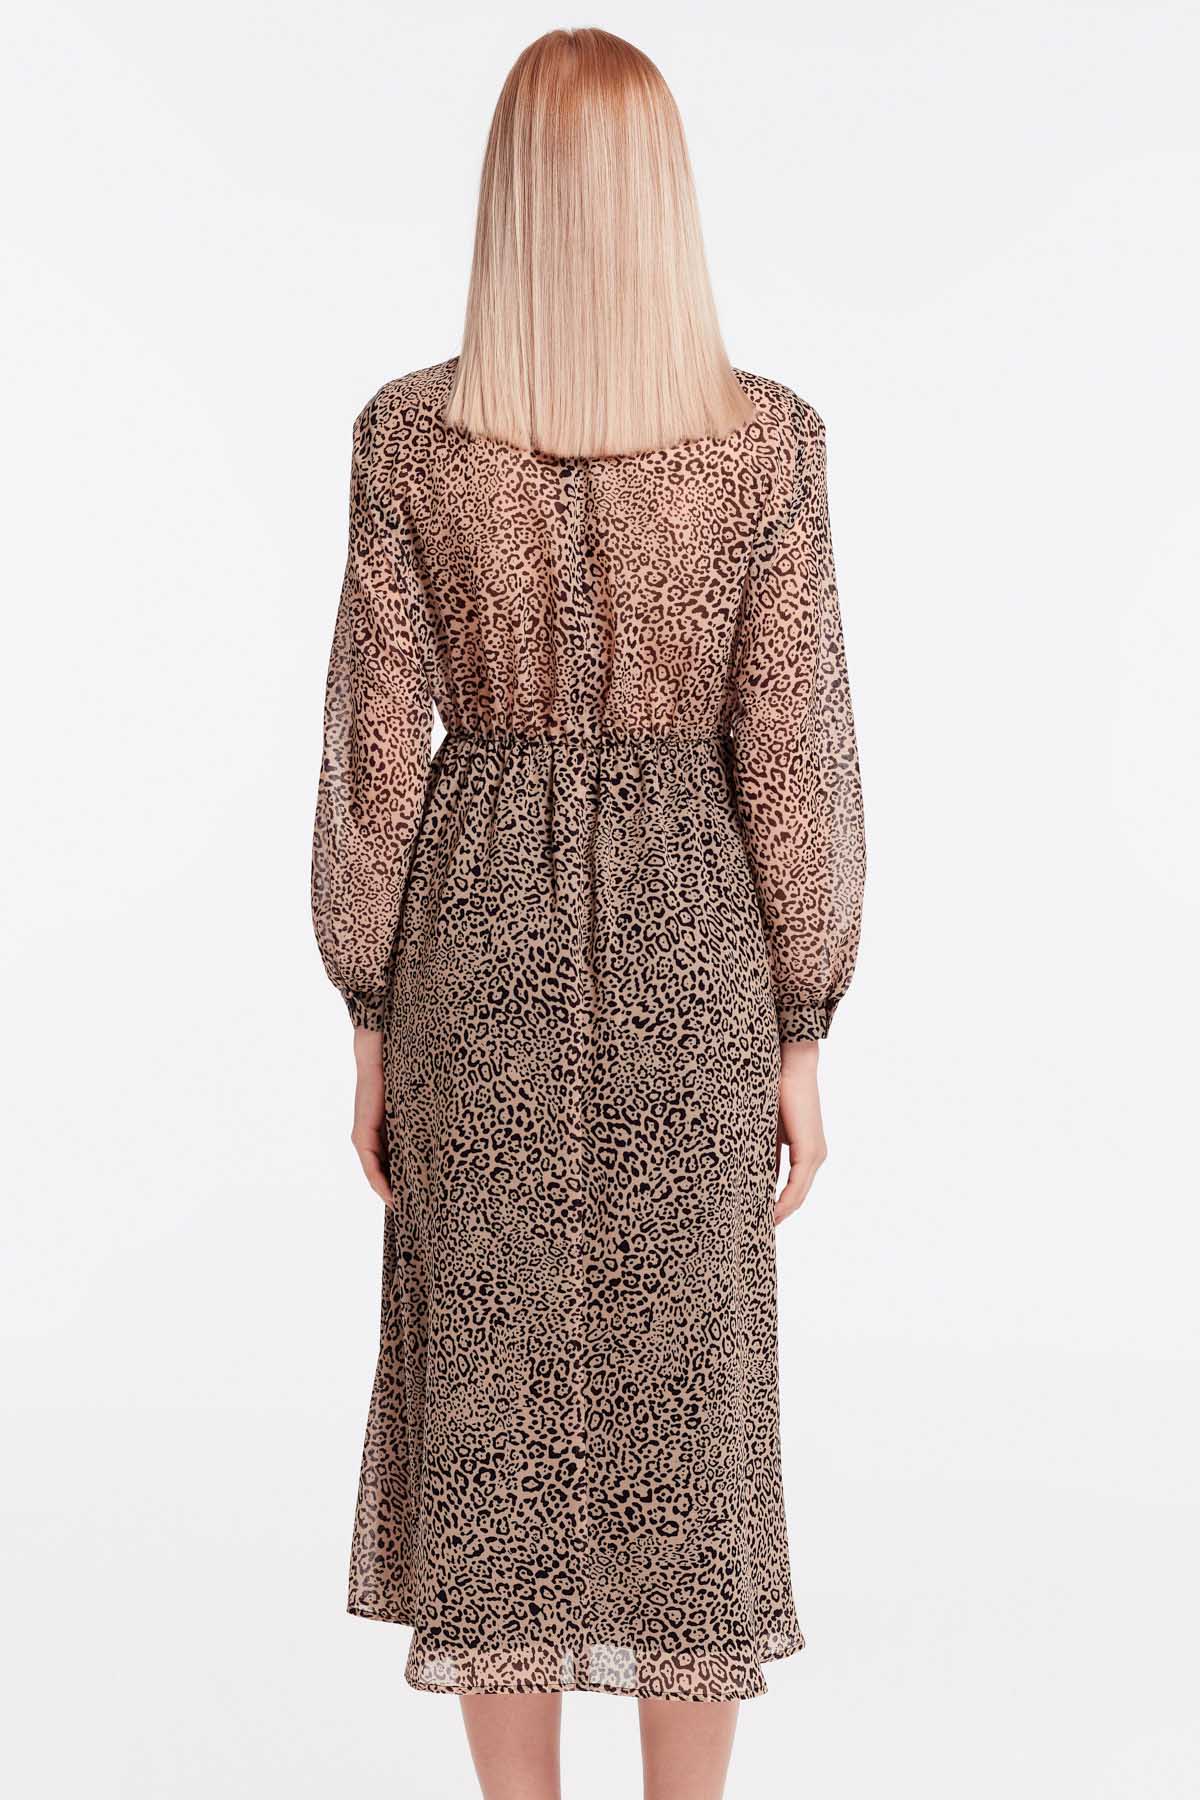 Midi dress with leopard print, photo 5